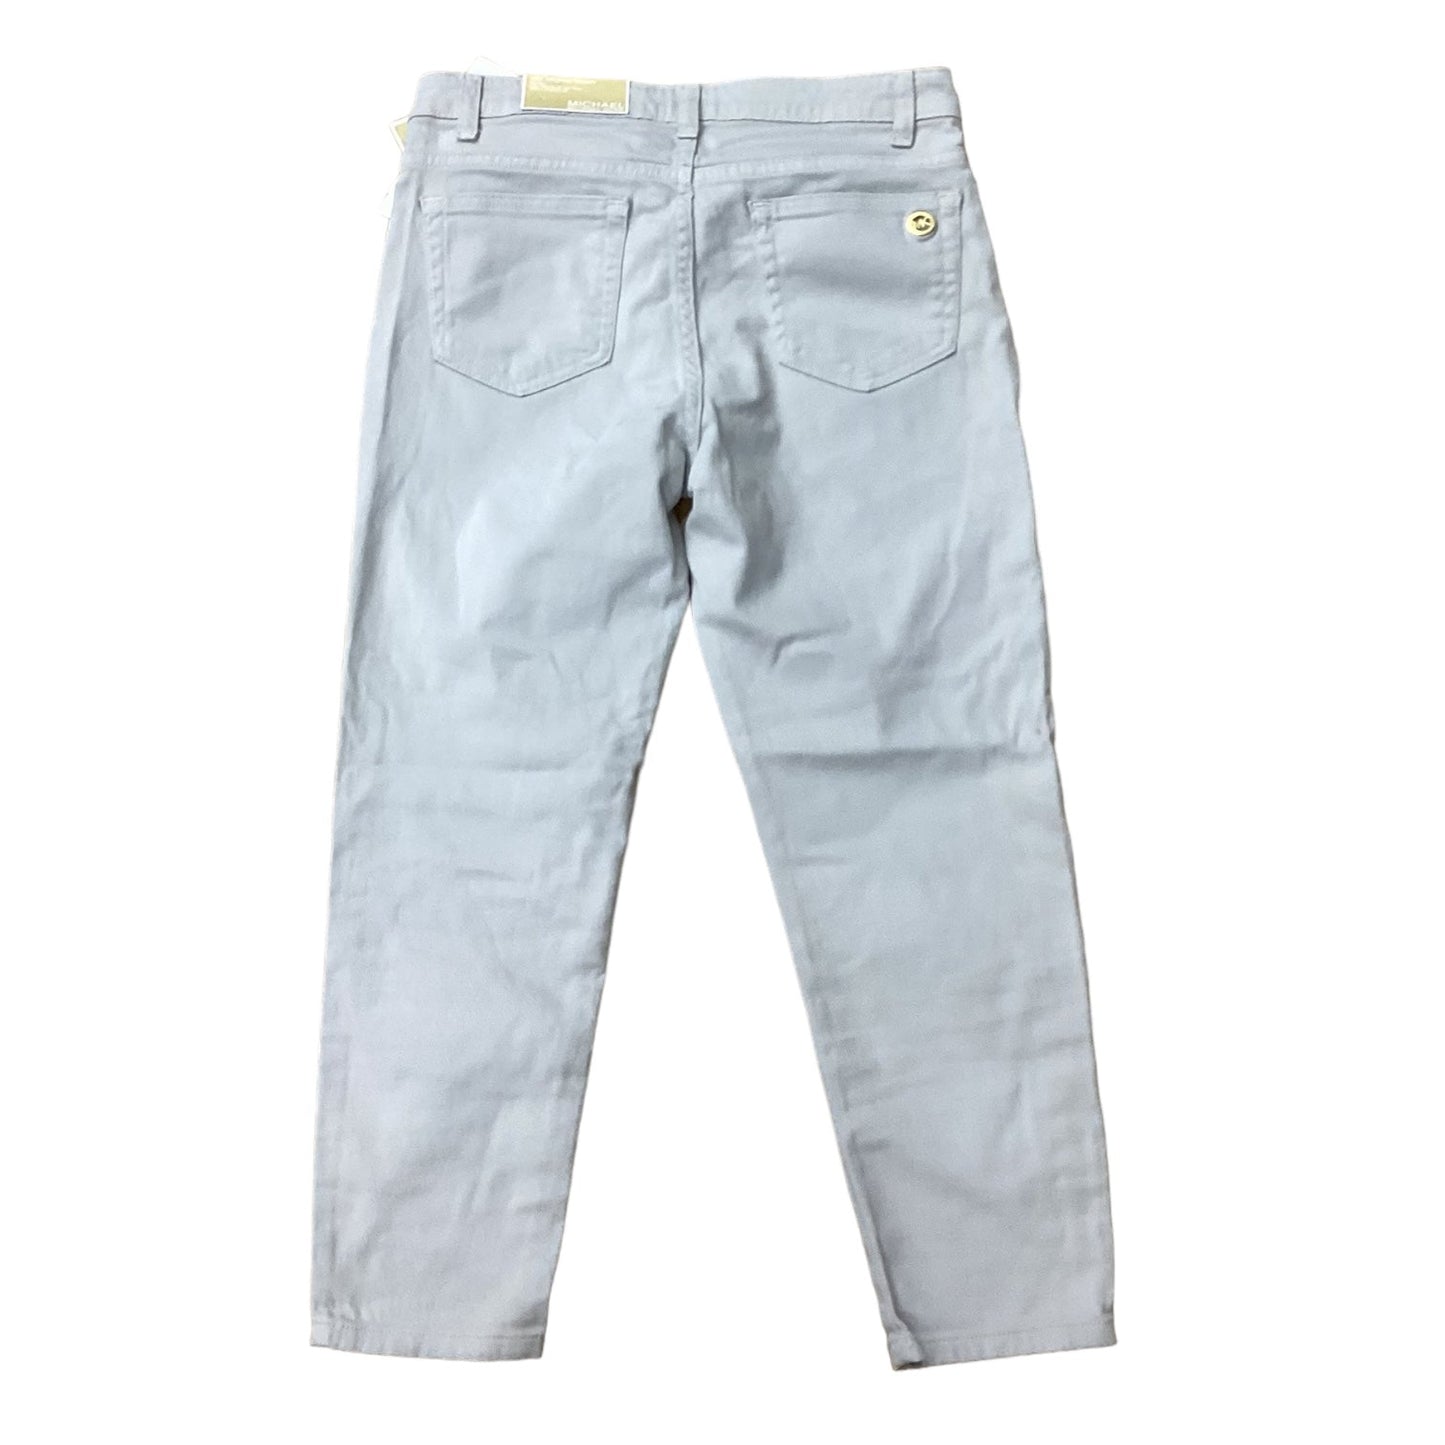 Grey Pants Designer Michael Kors, Size 8